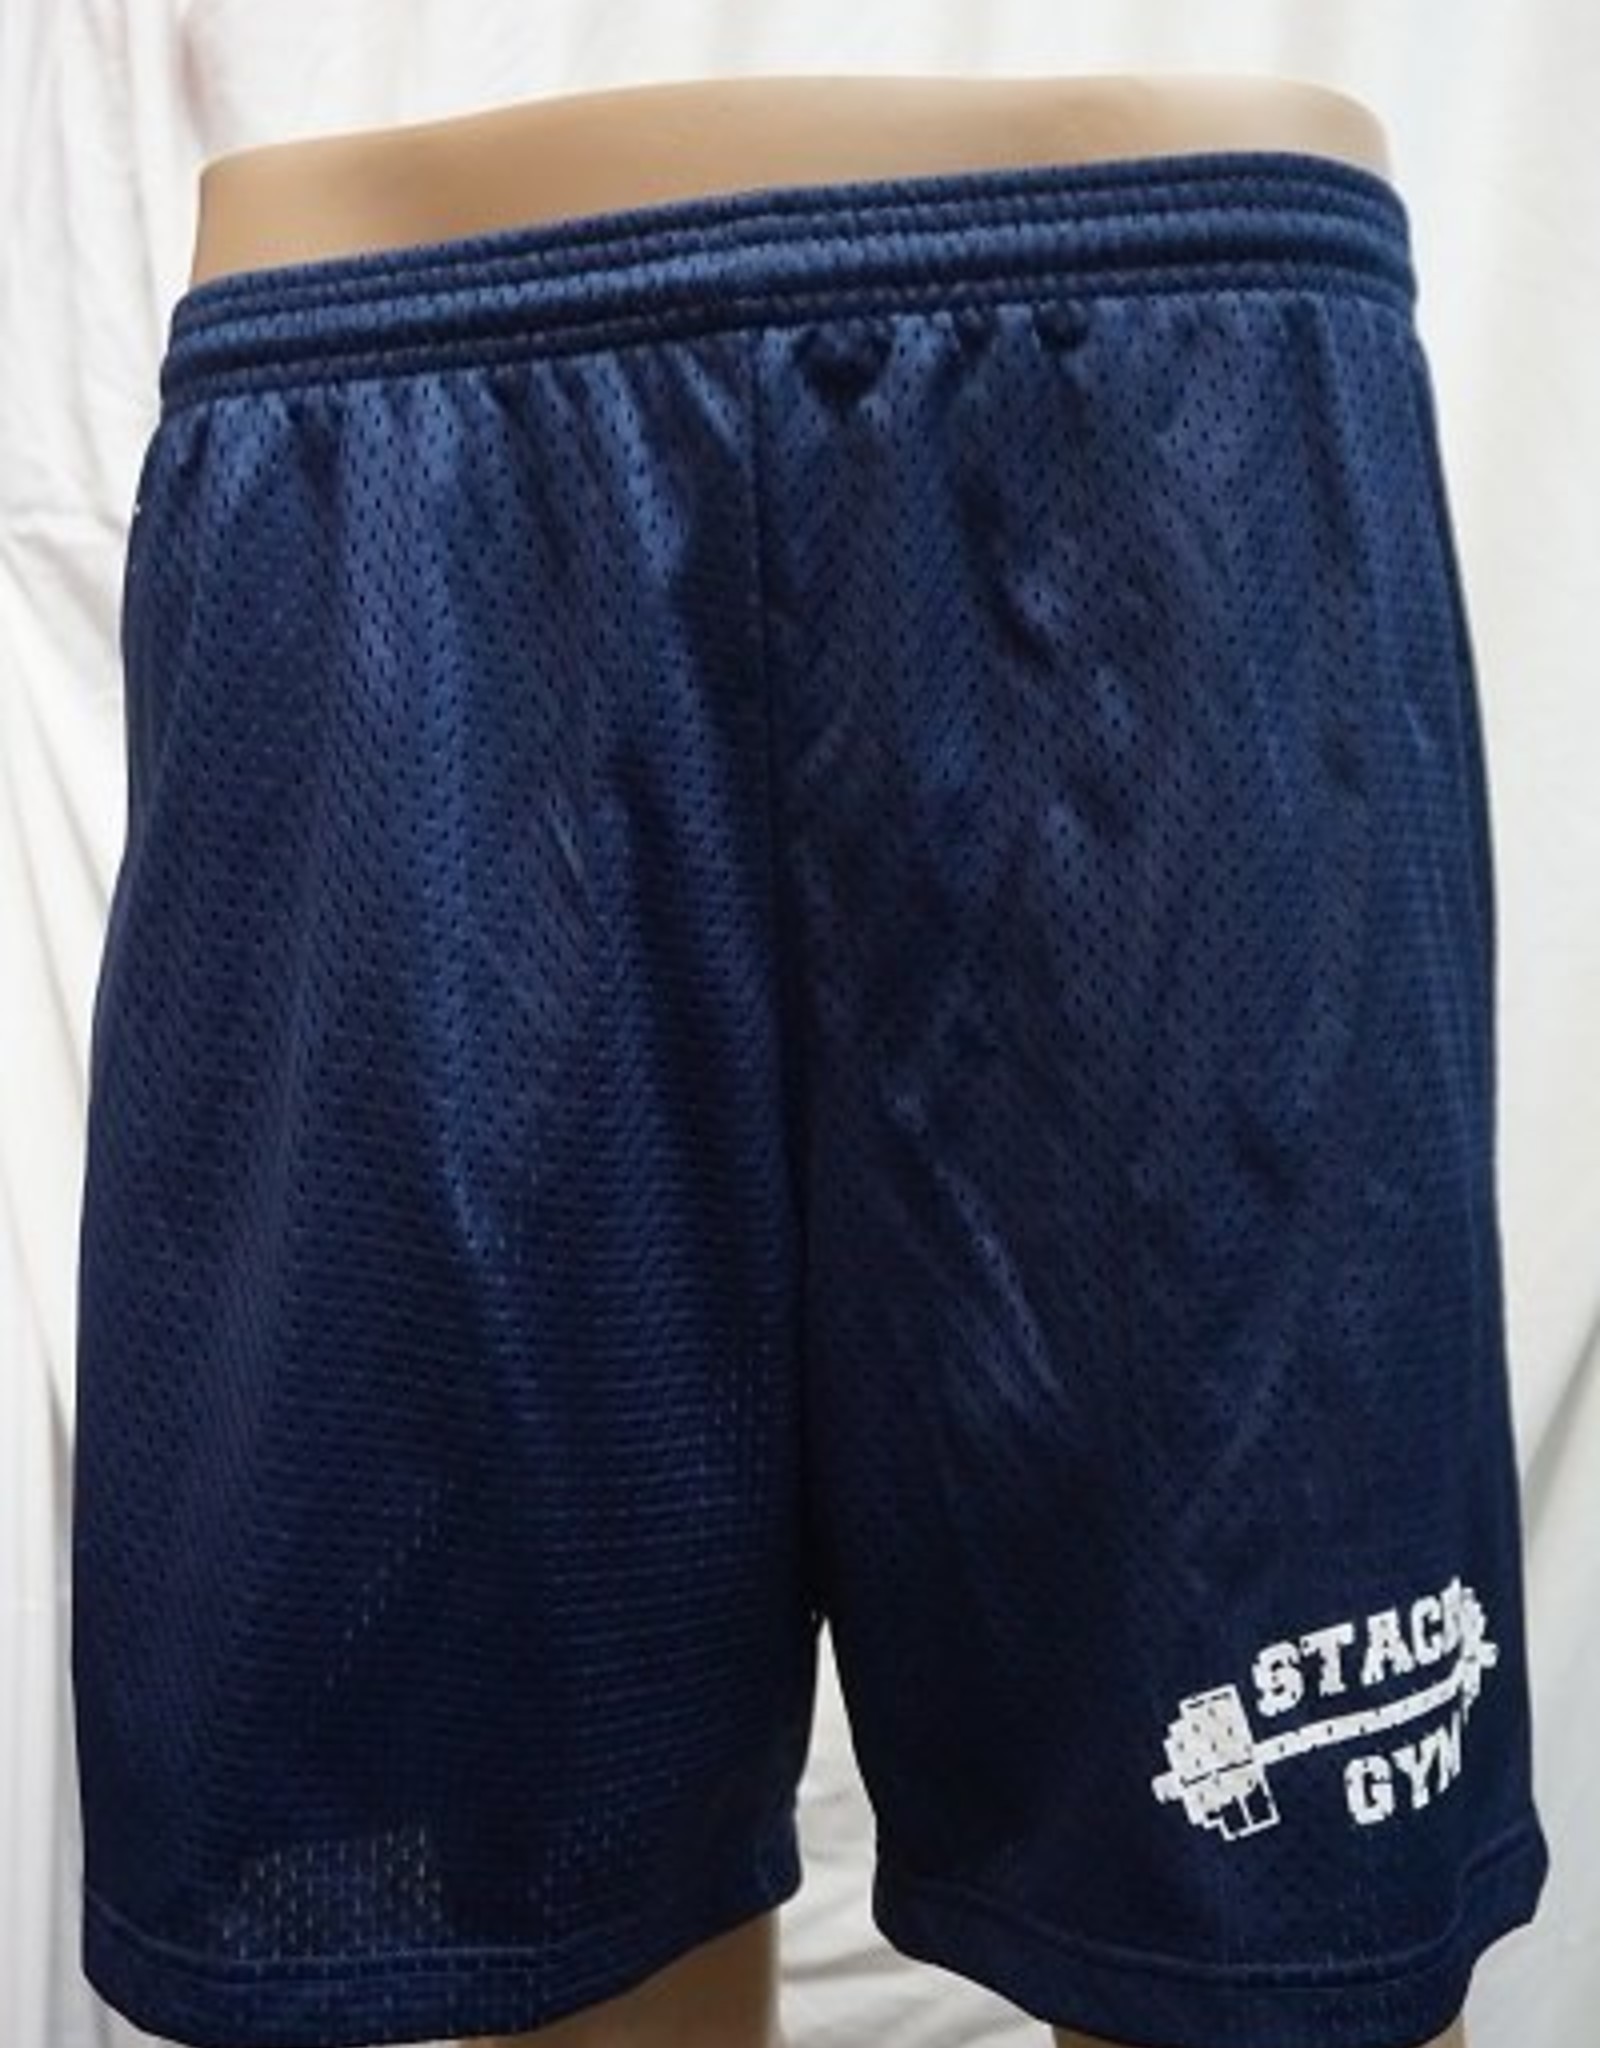 Stack's Gym Stack's Gym Badger Shorts